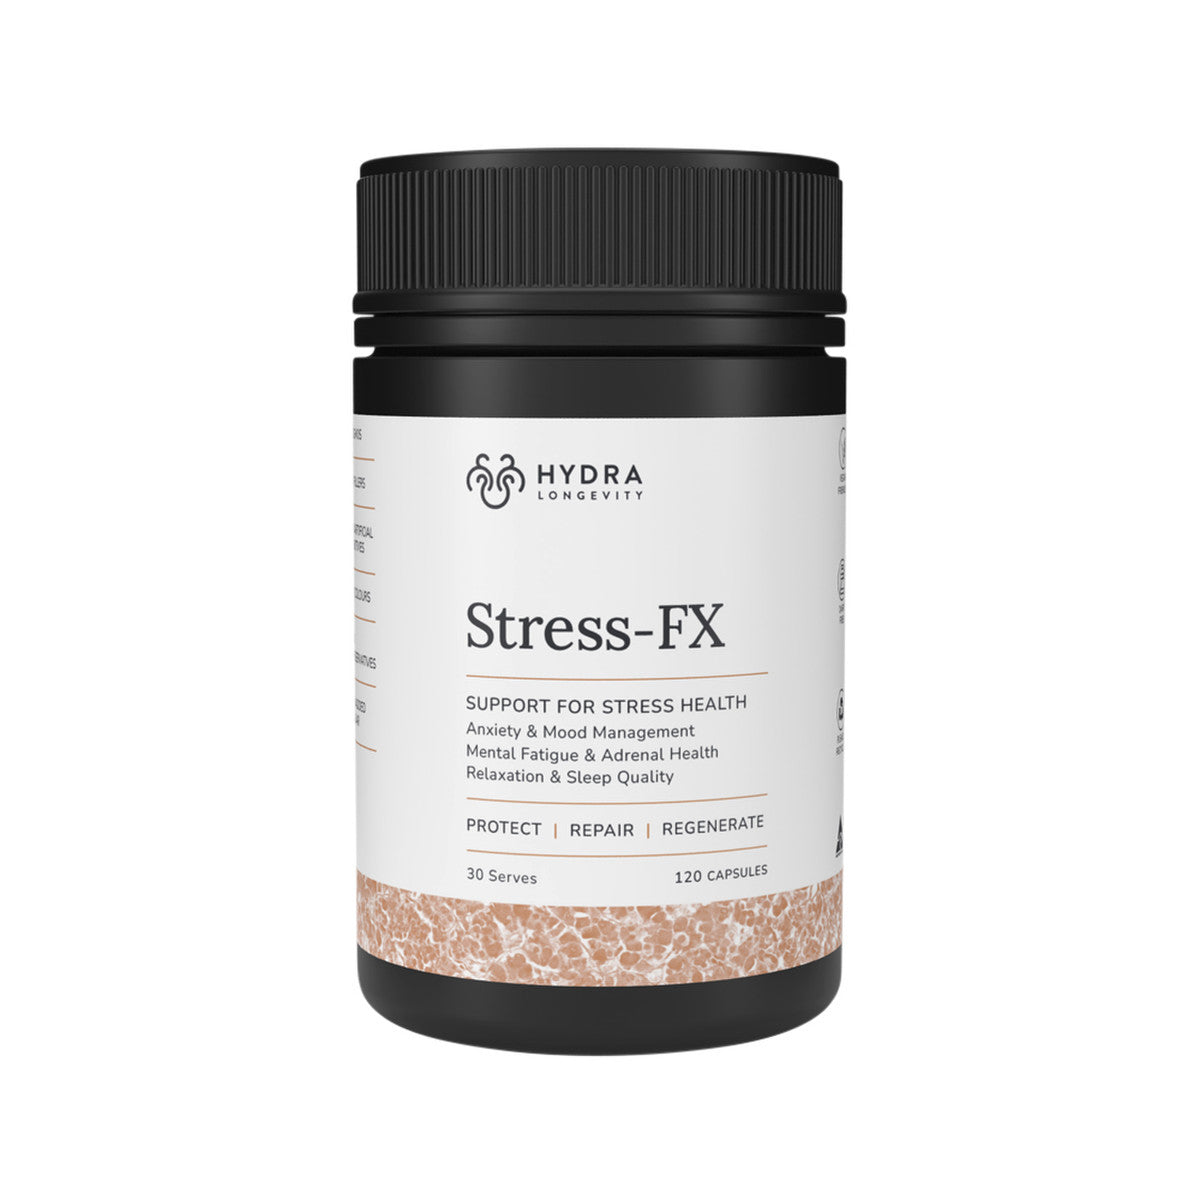 Hydra Longevity - Stress-FX